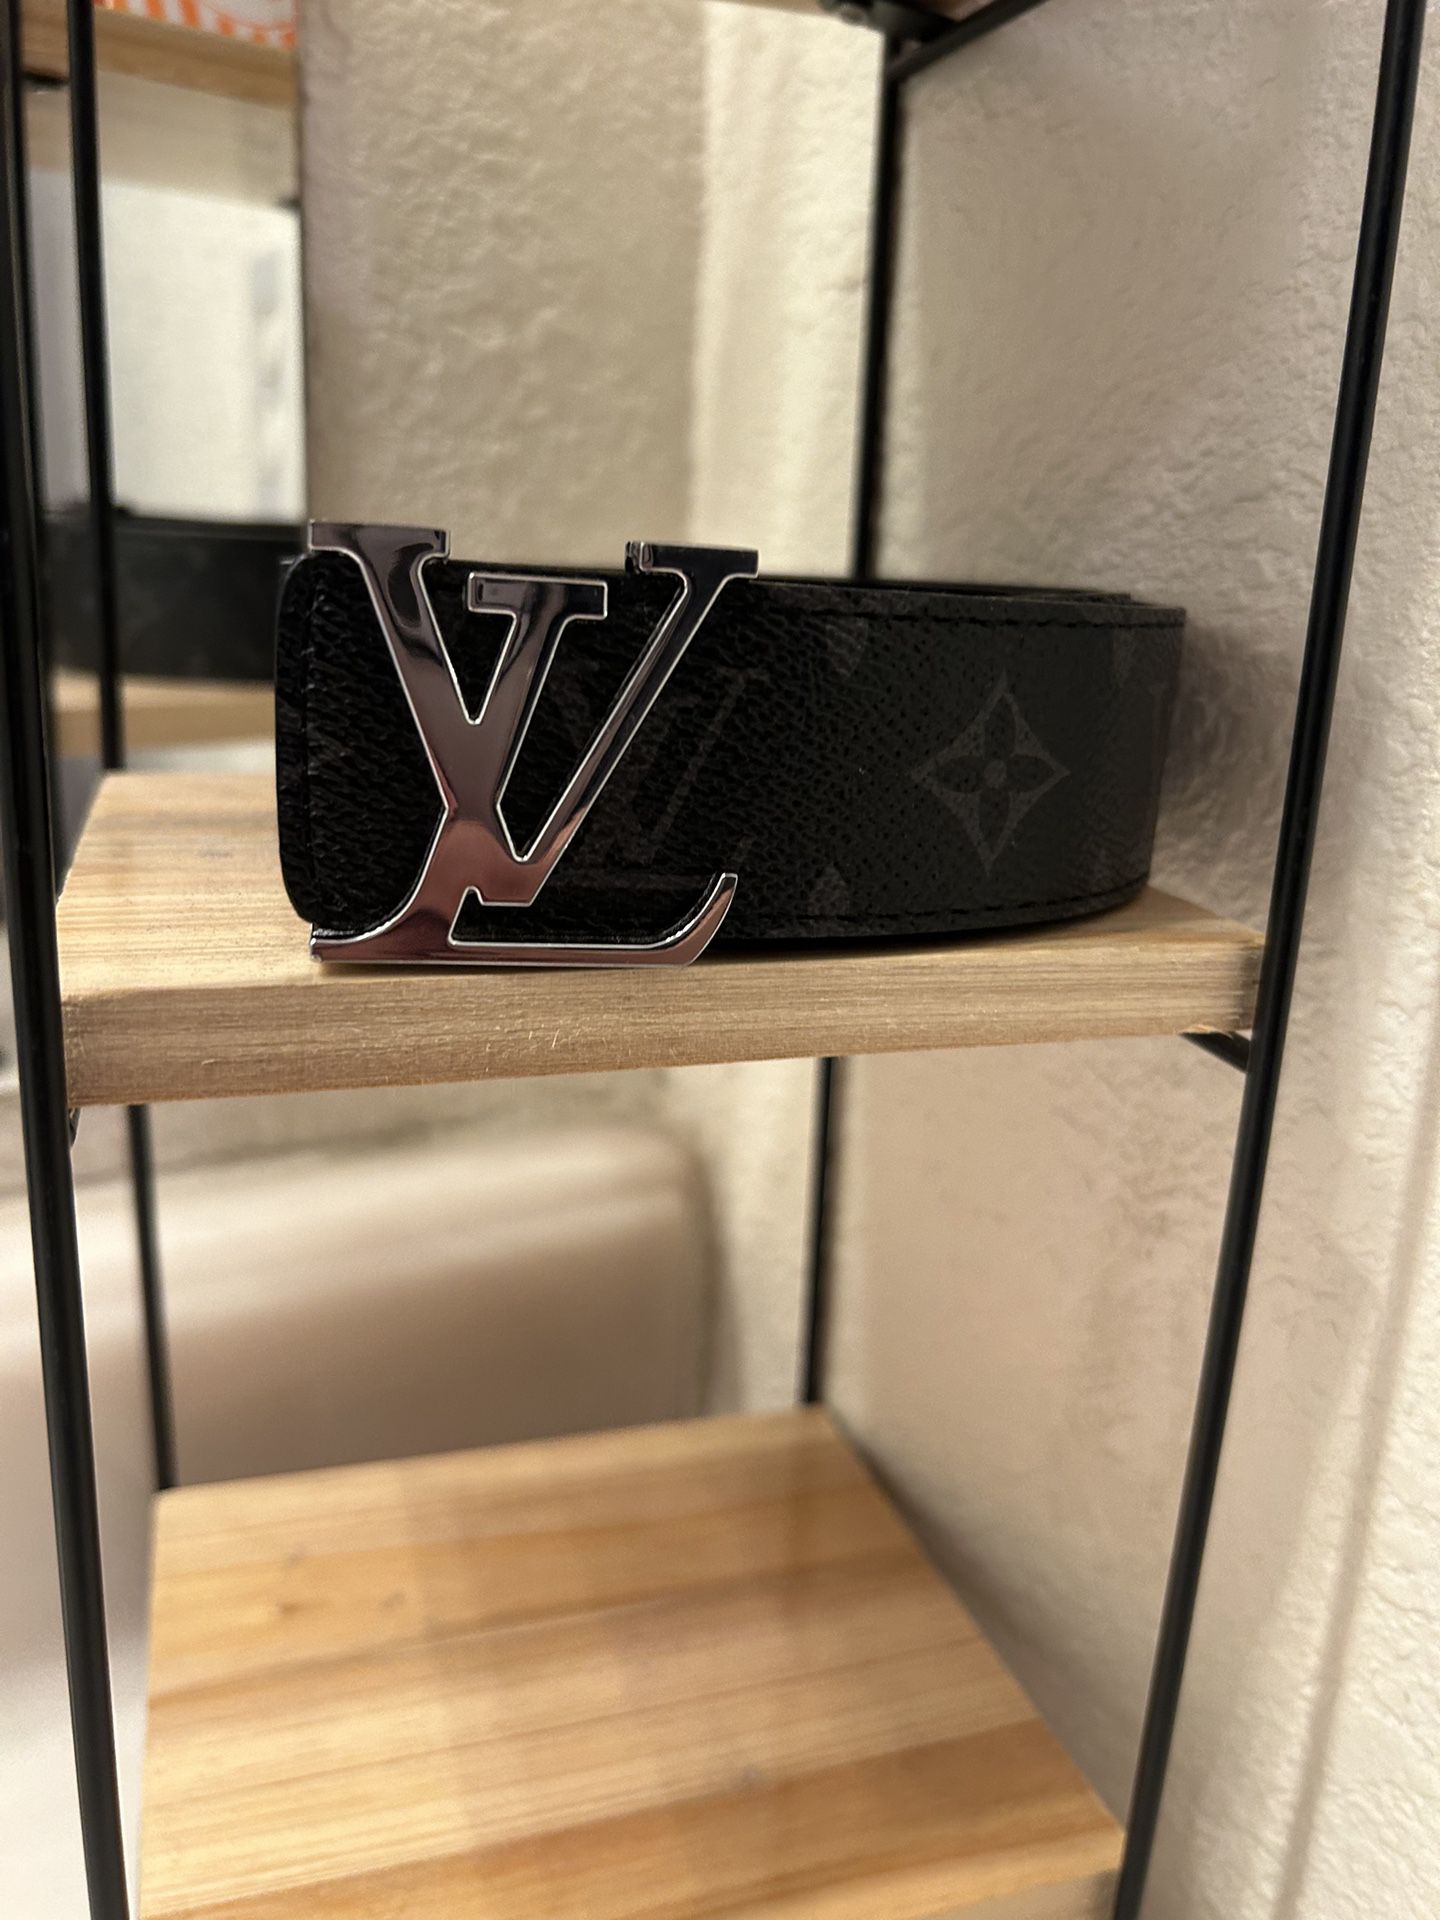 LV Belt for Sale in Fort Hood, TX - OfferUp